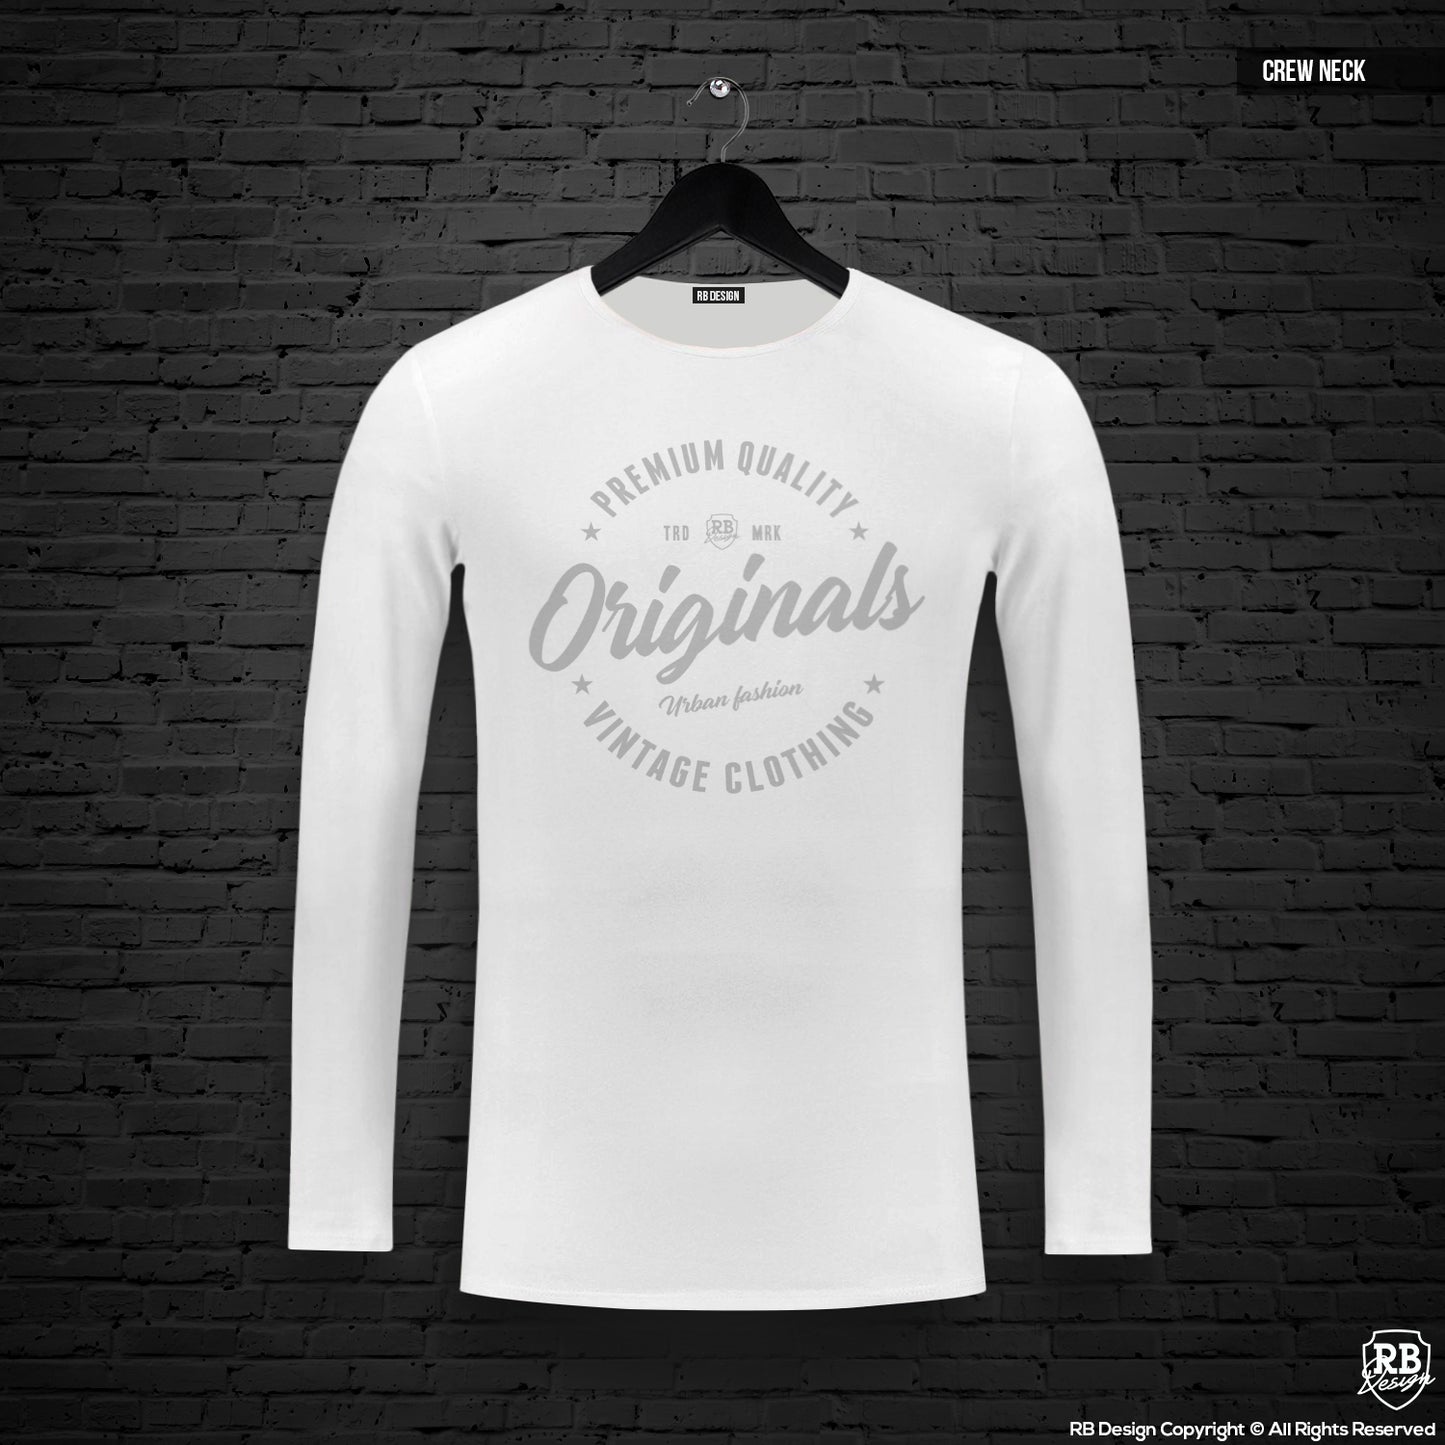 Mens Long Sleeve T-shirt "Originals" MD958